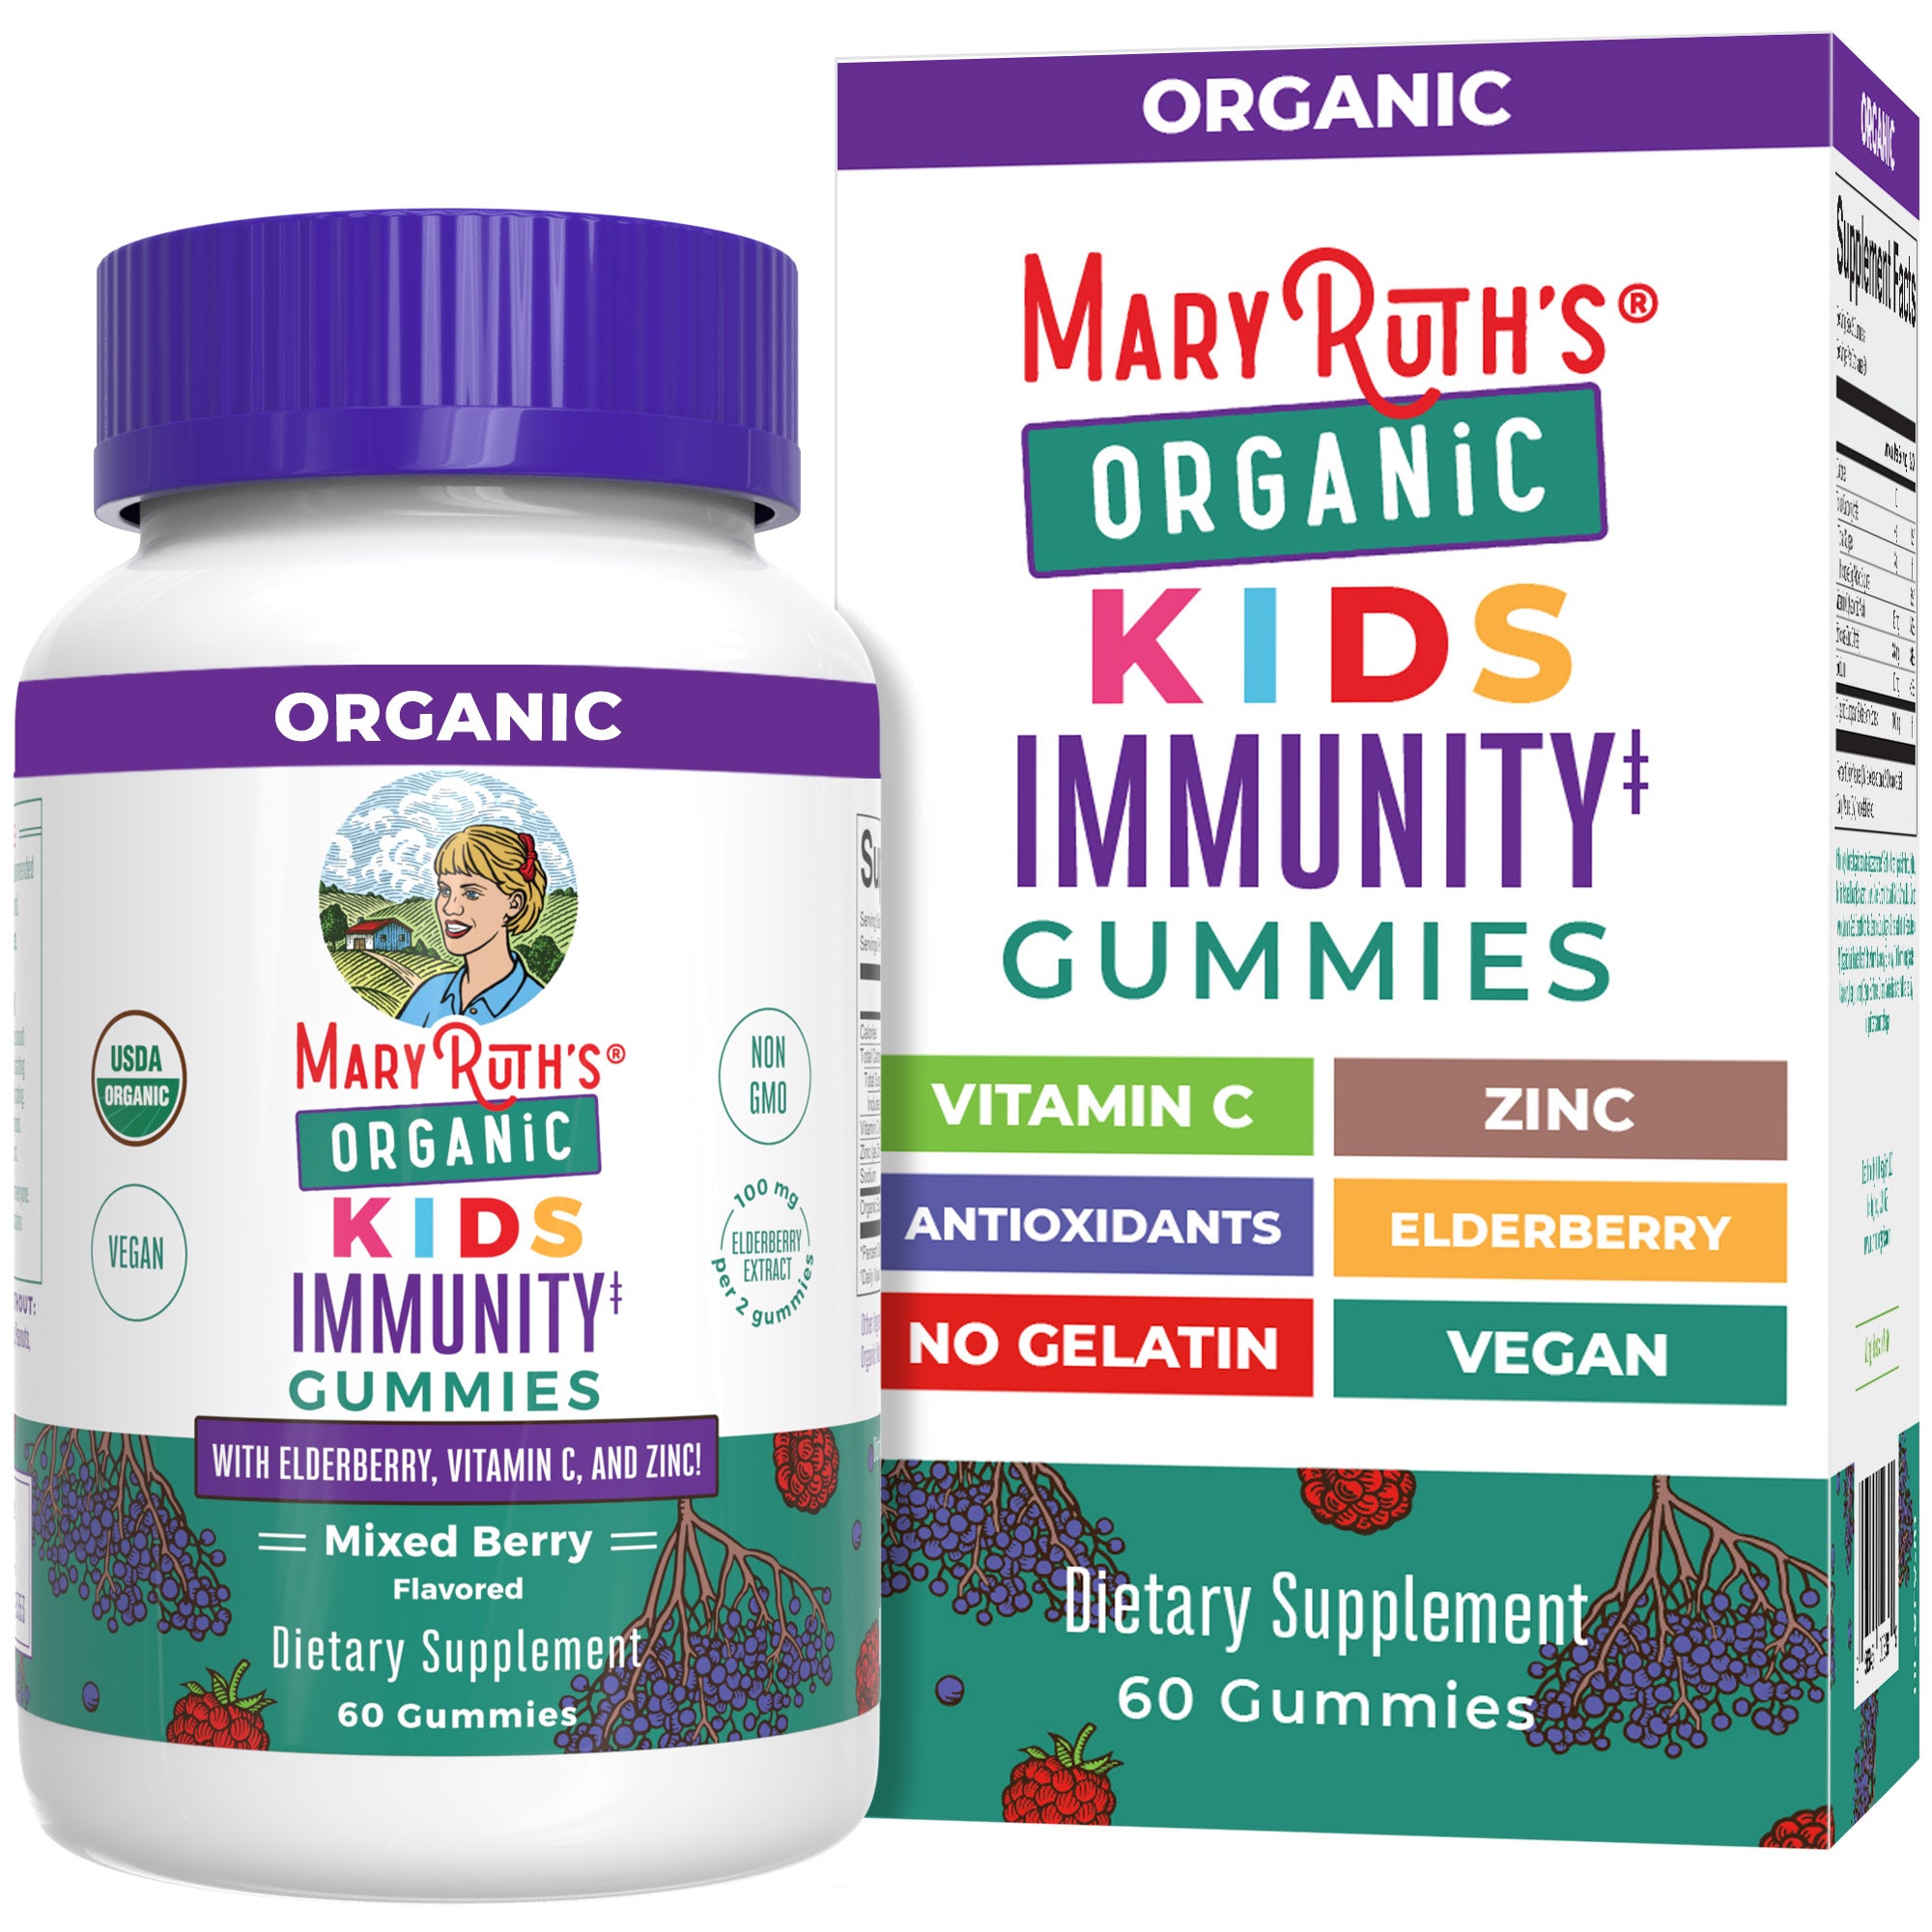 Organic Kids Immunity Gummies